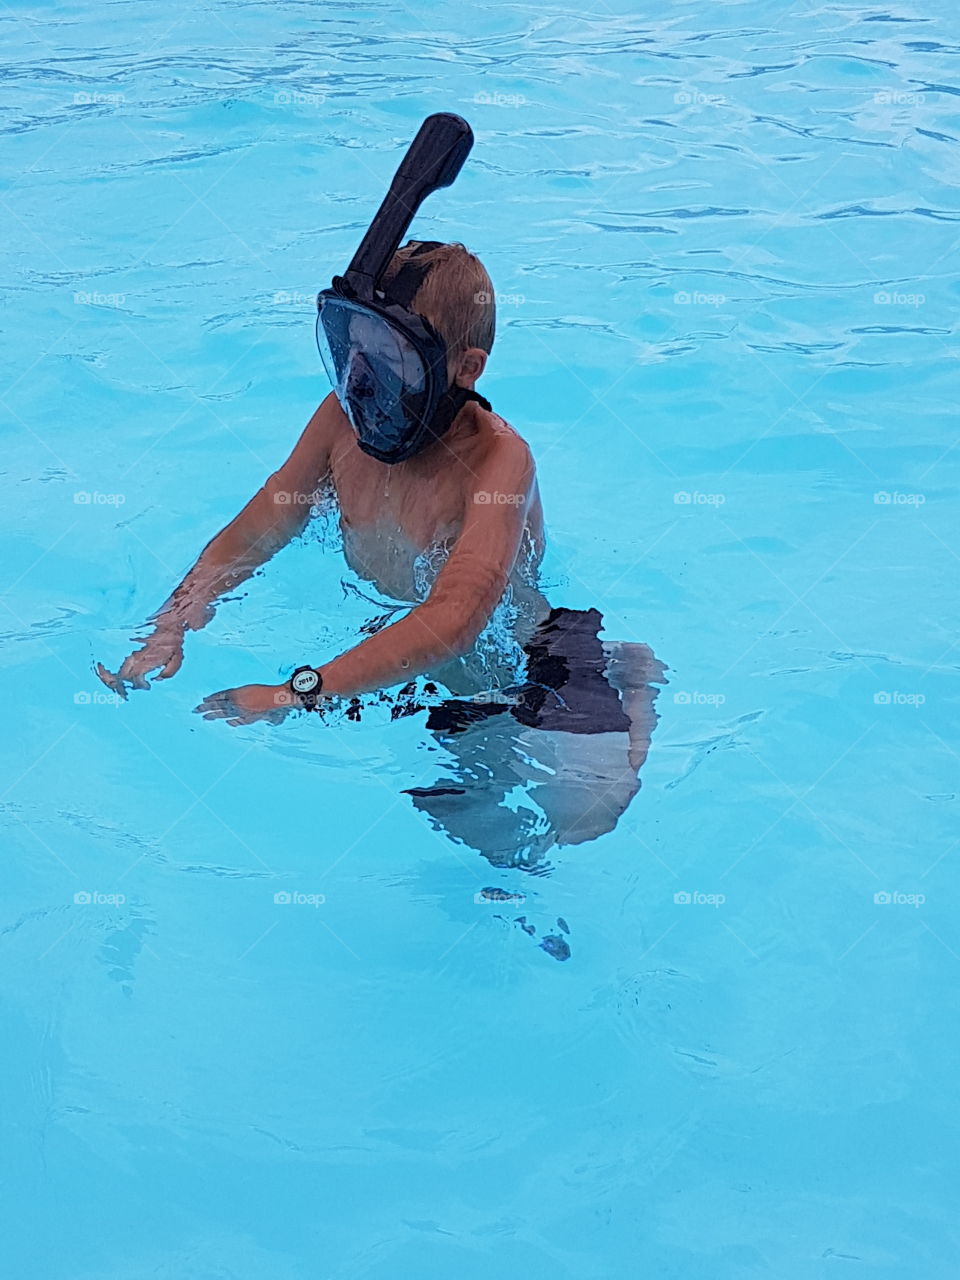 snorkeling in the pool